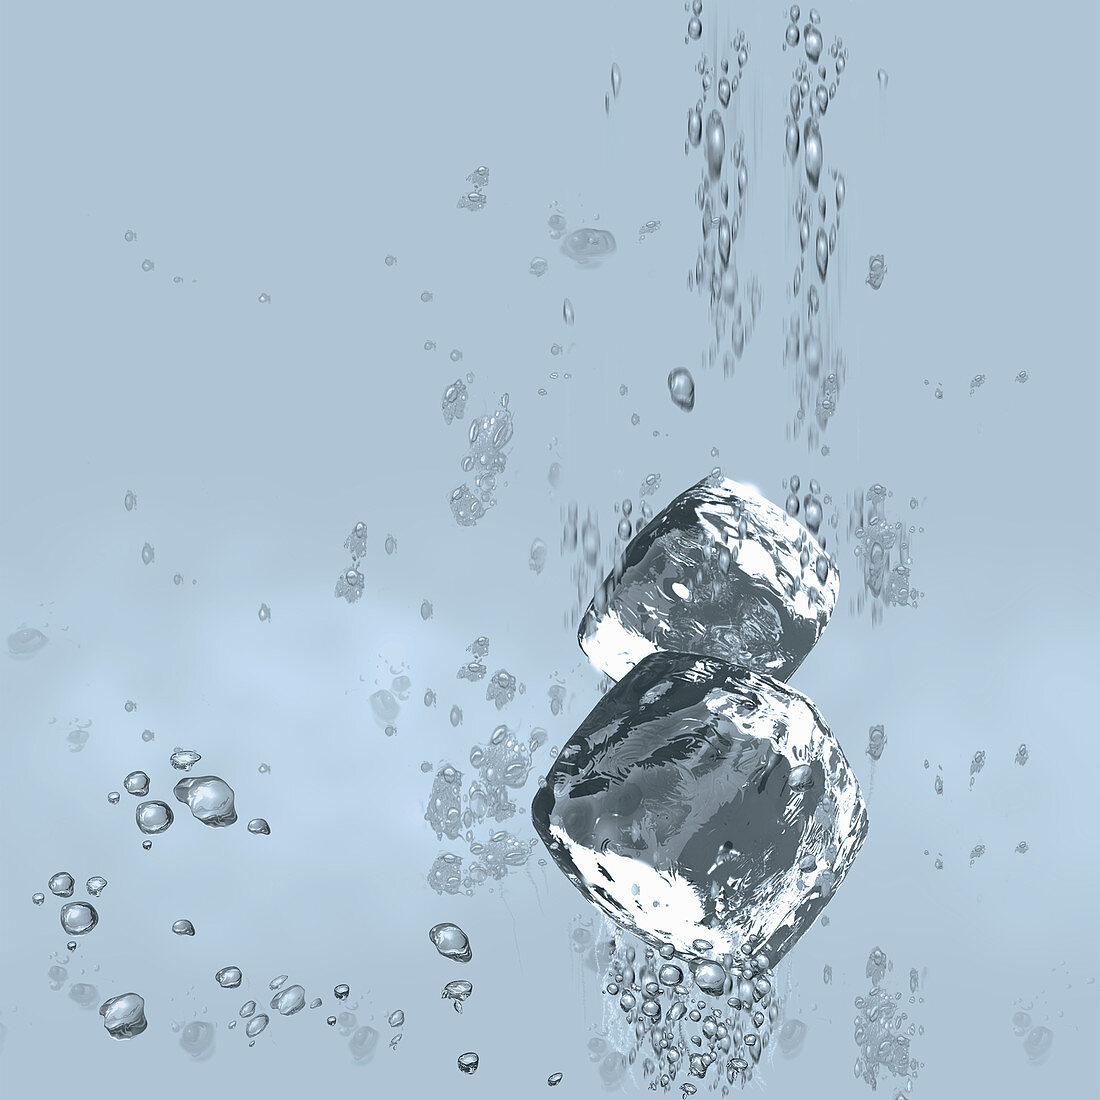 Ice cubes falling underwater, illustration